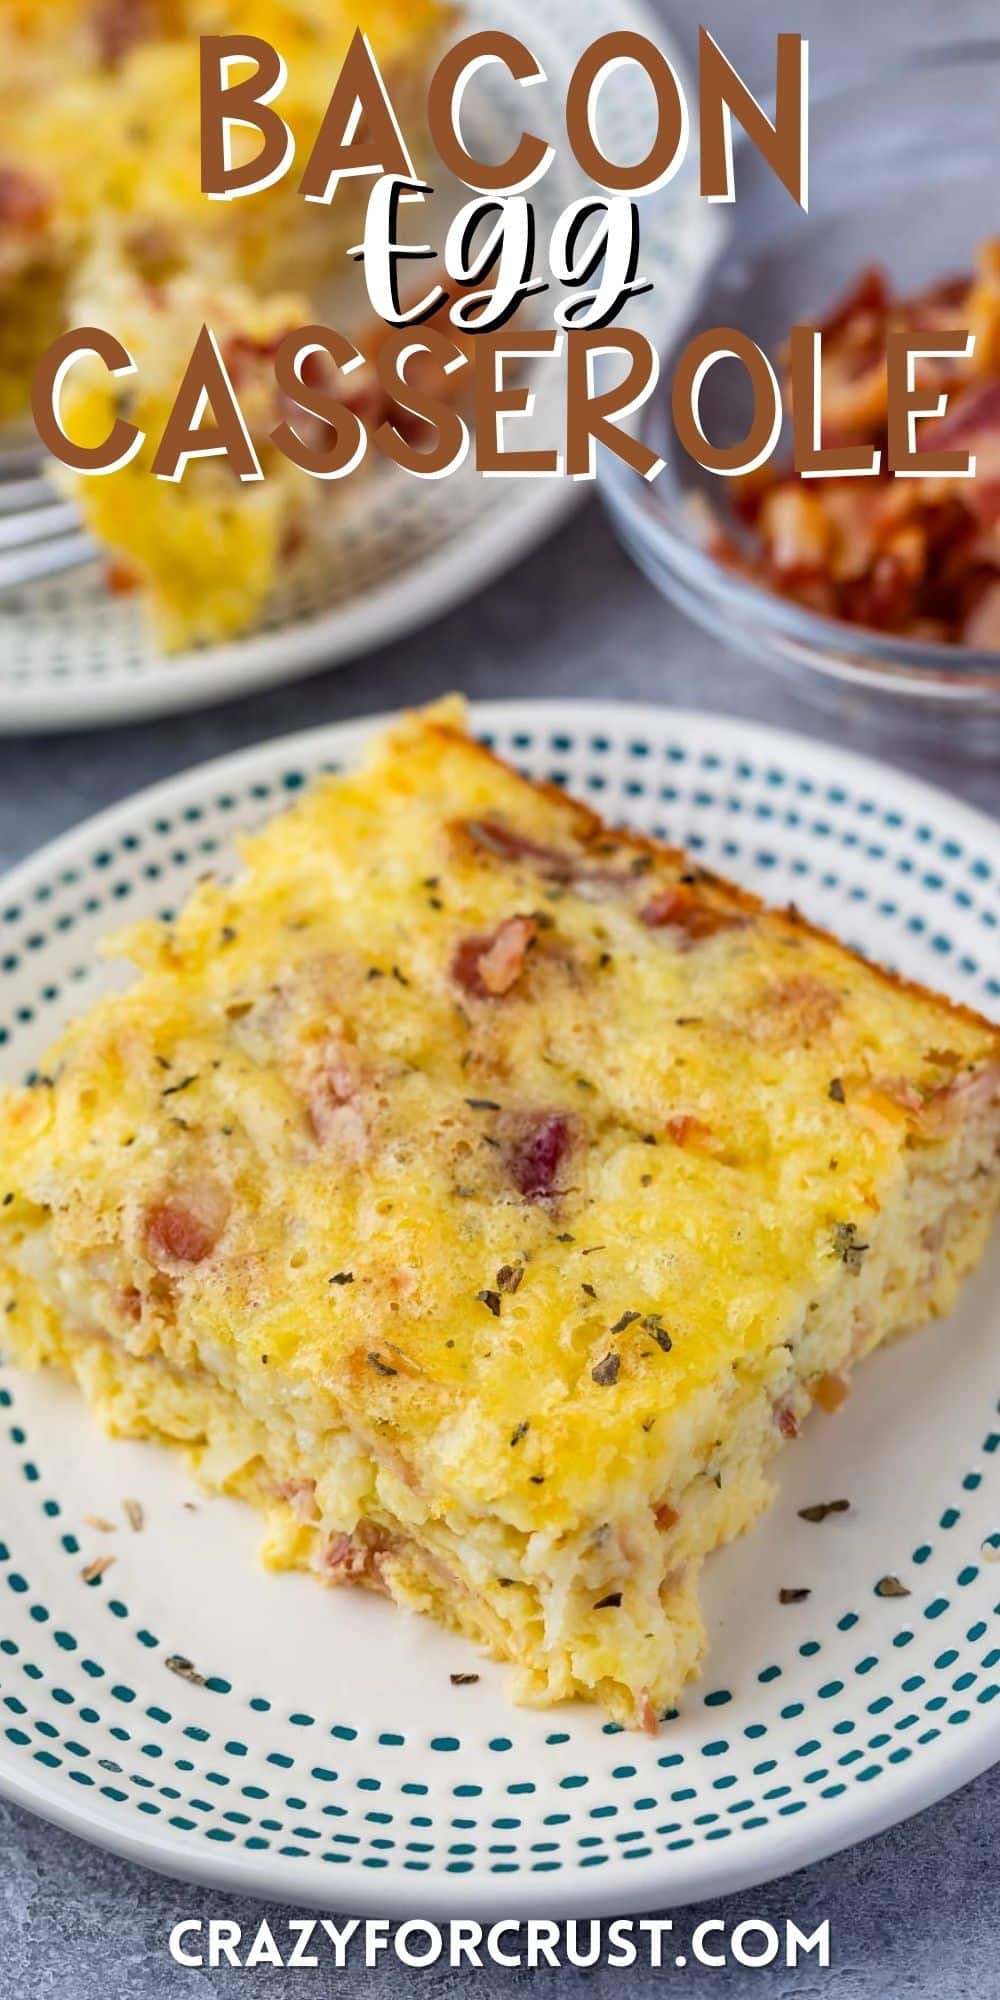 Make-ahead vegetable and bacon egg bake skillet recipe